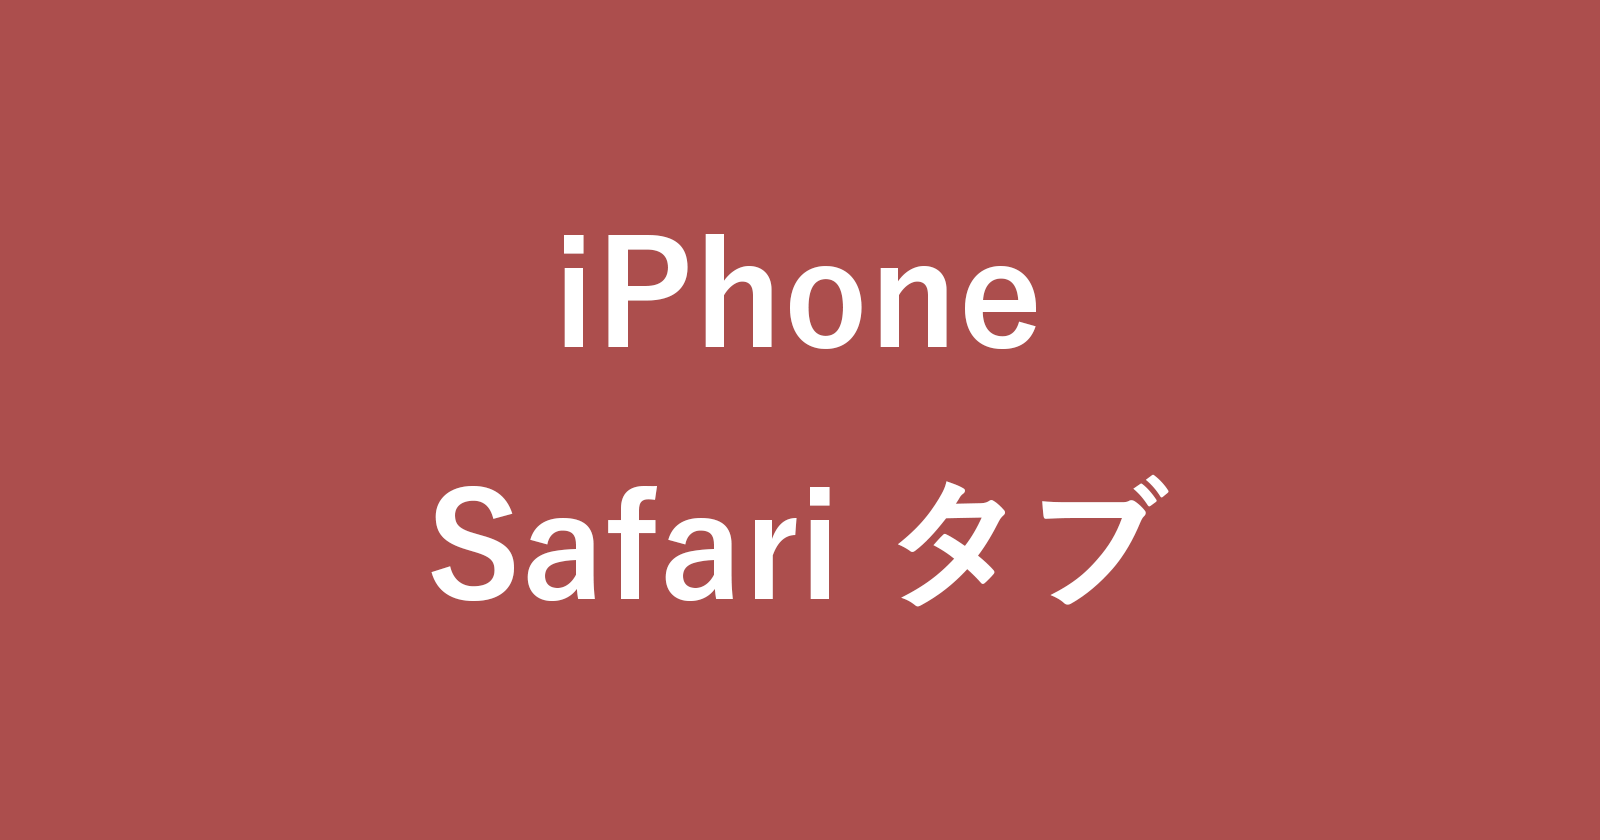 iphone safari tab close